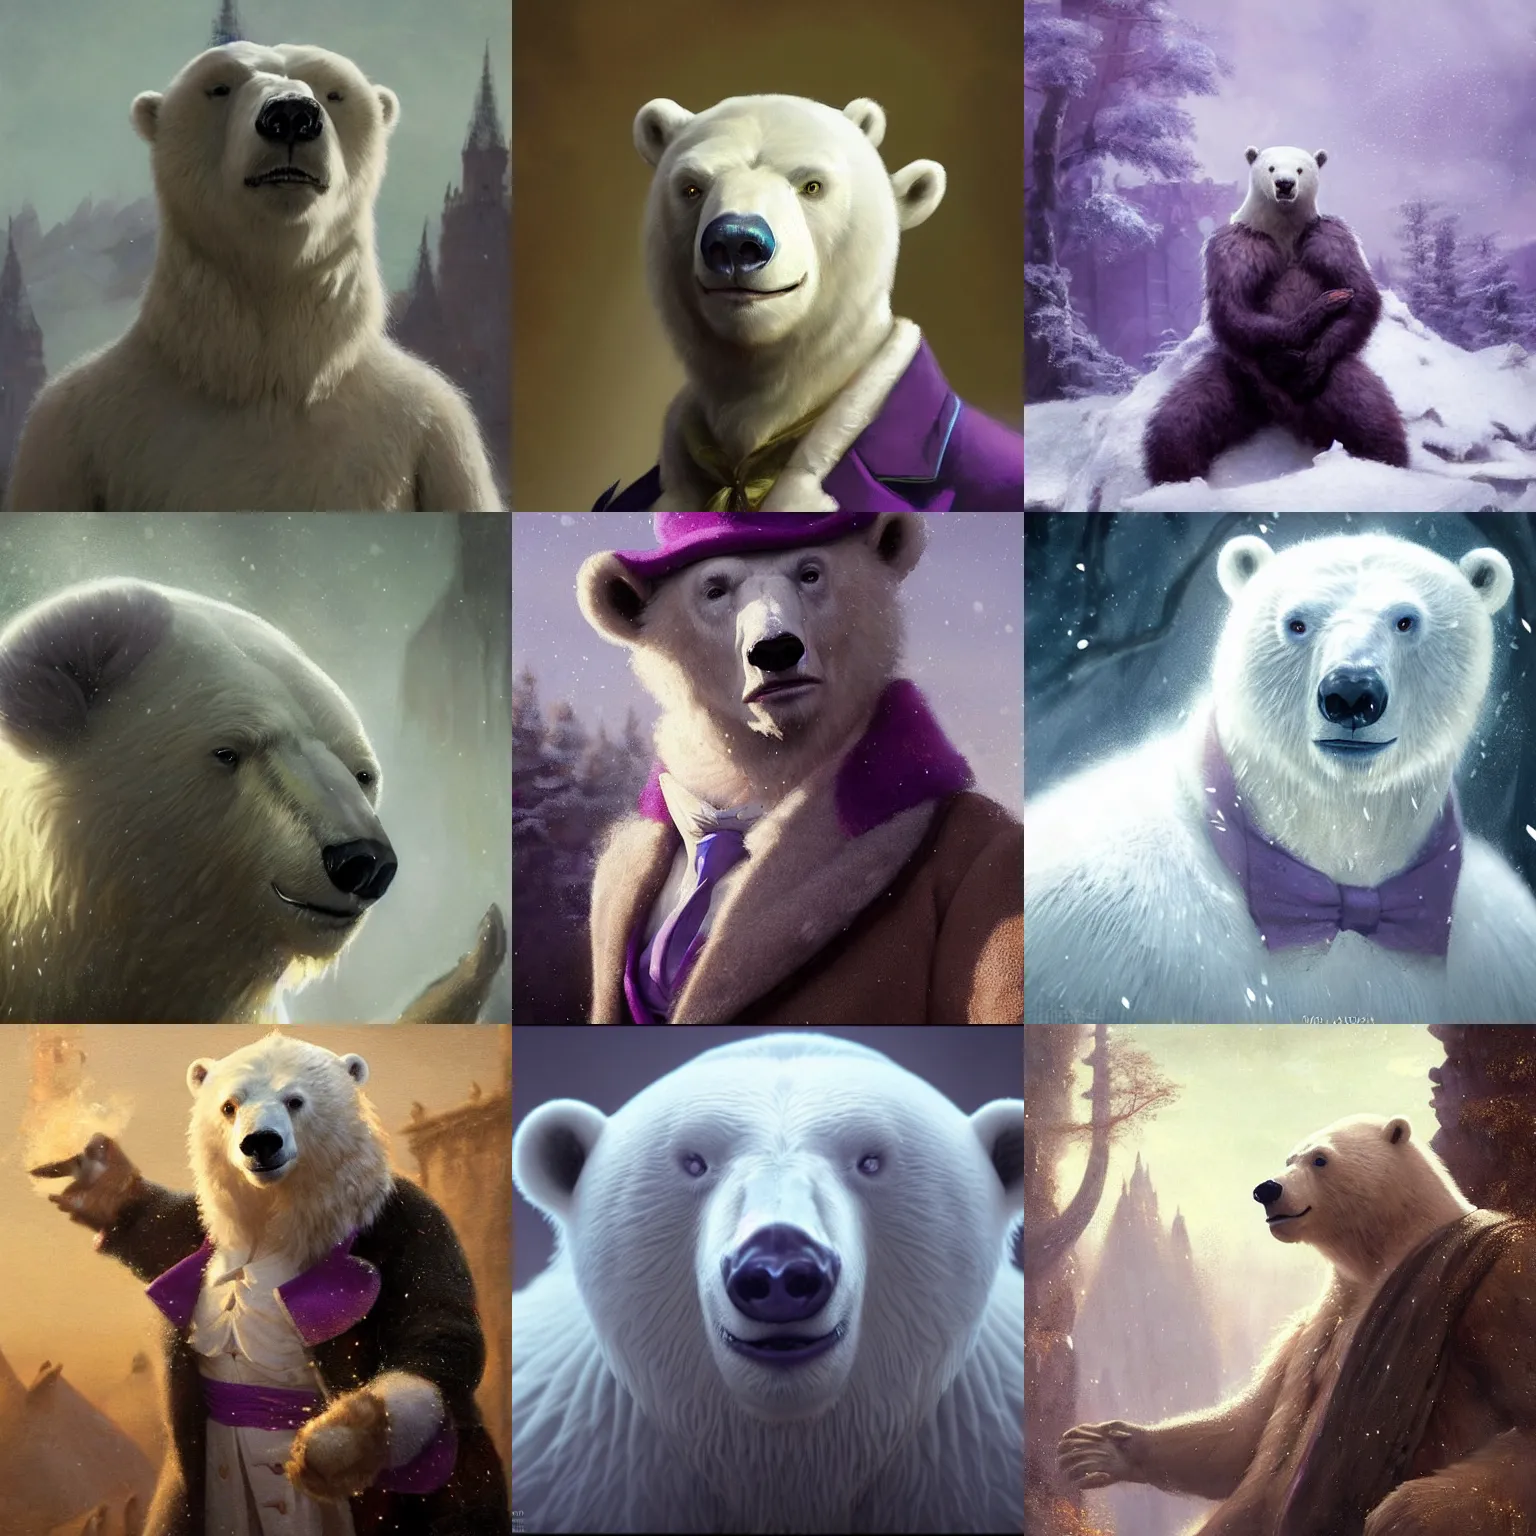 Prompt: a beautiful close - up shot from a fantasy film of an anthropomorphic polar bear wearing a purple tuxedo. joseph ducreux, greg rutkowski.